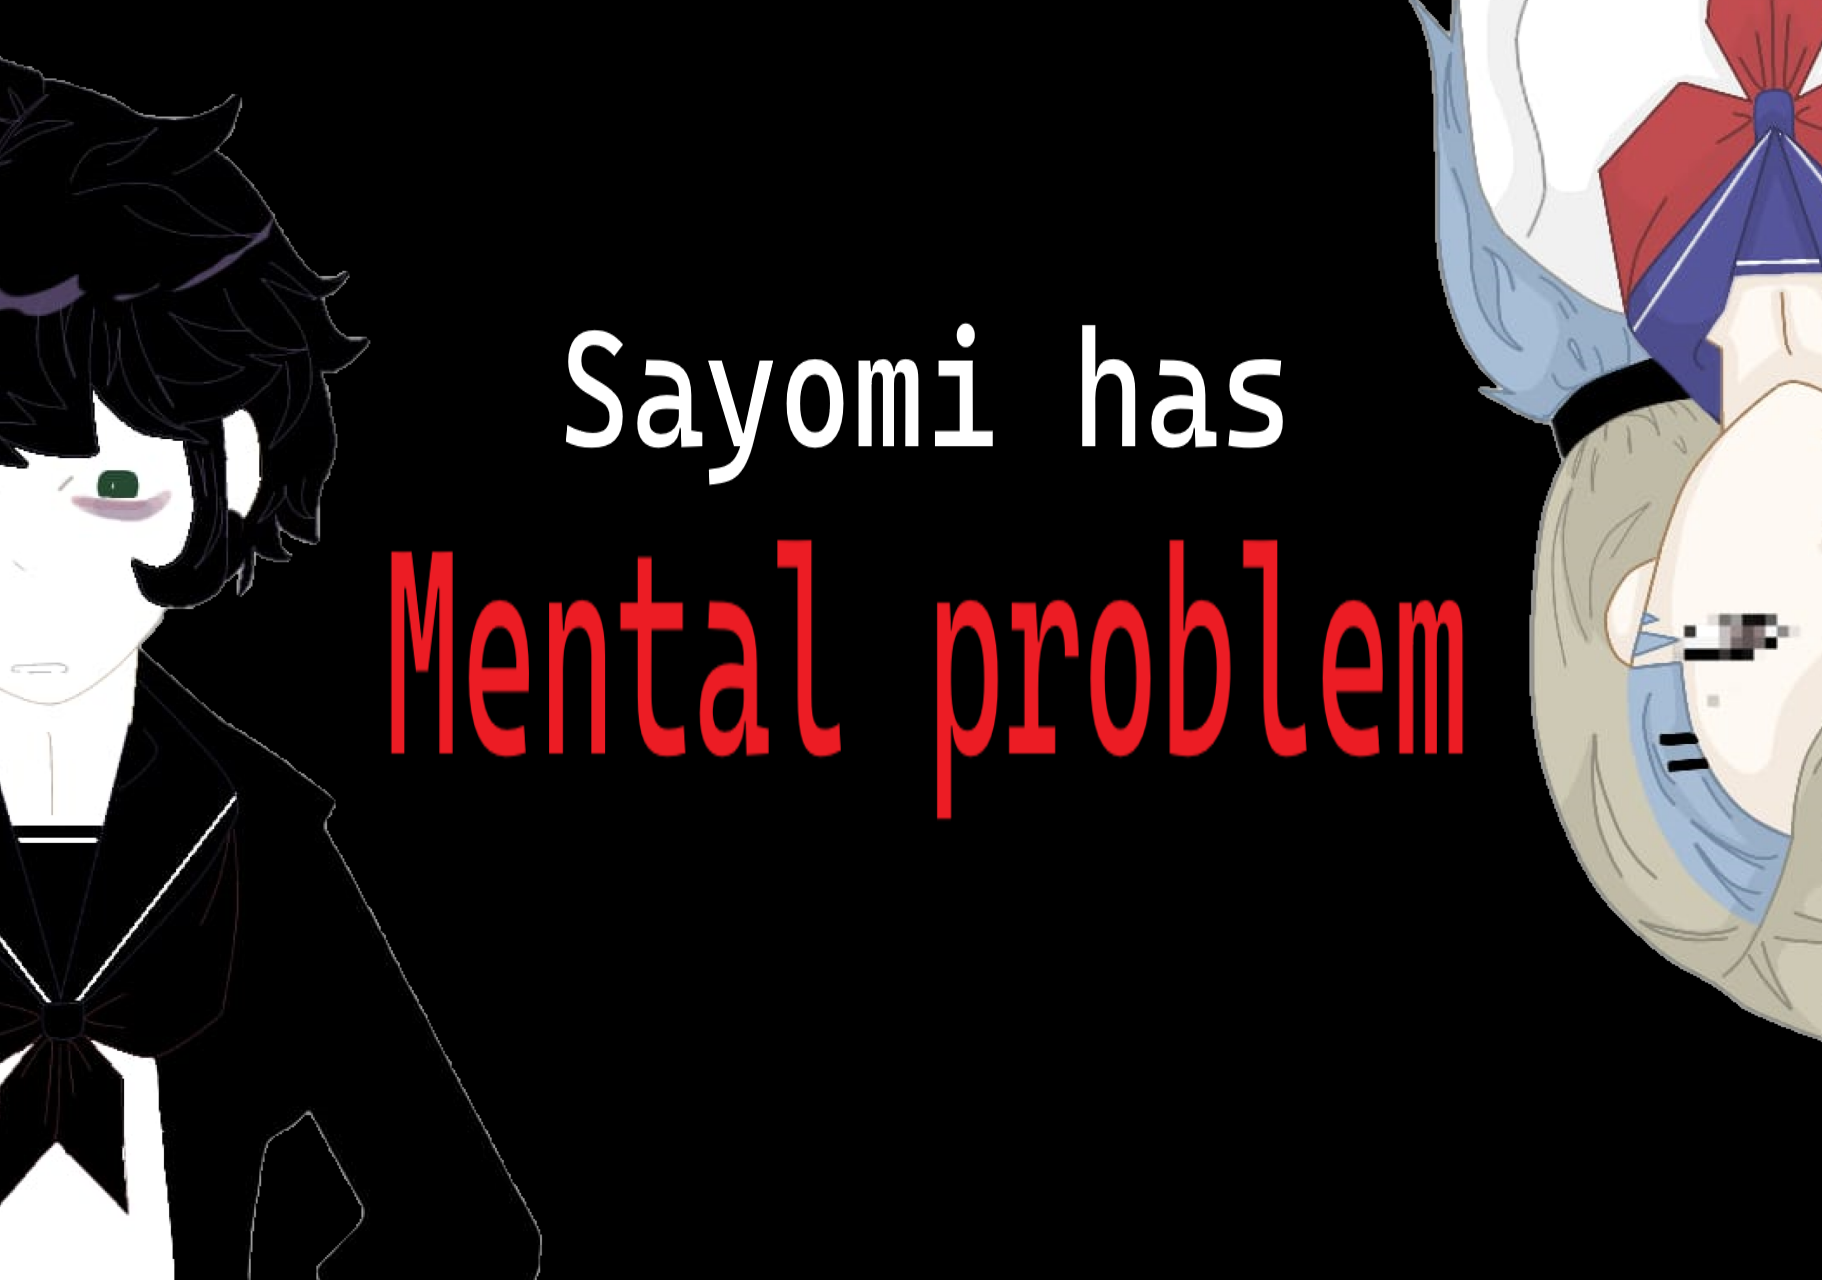 Sayomi has mental problem